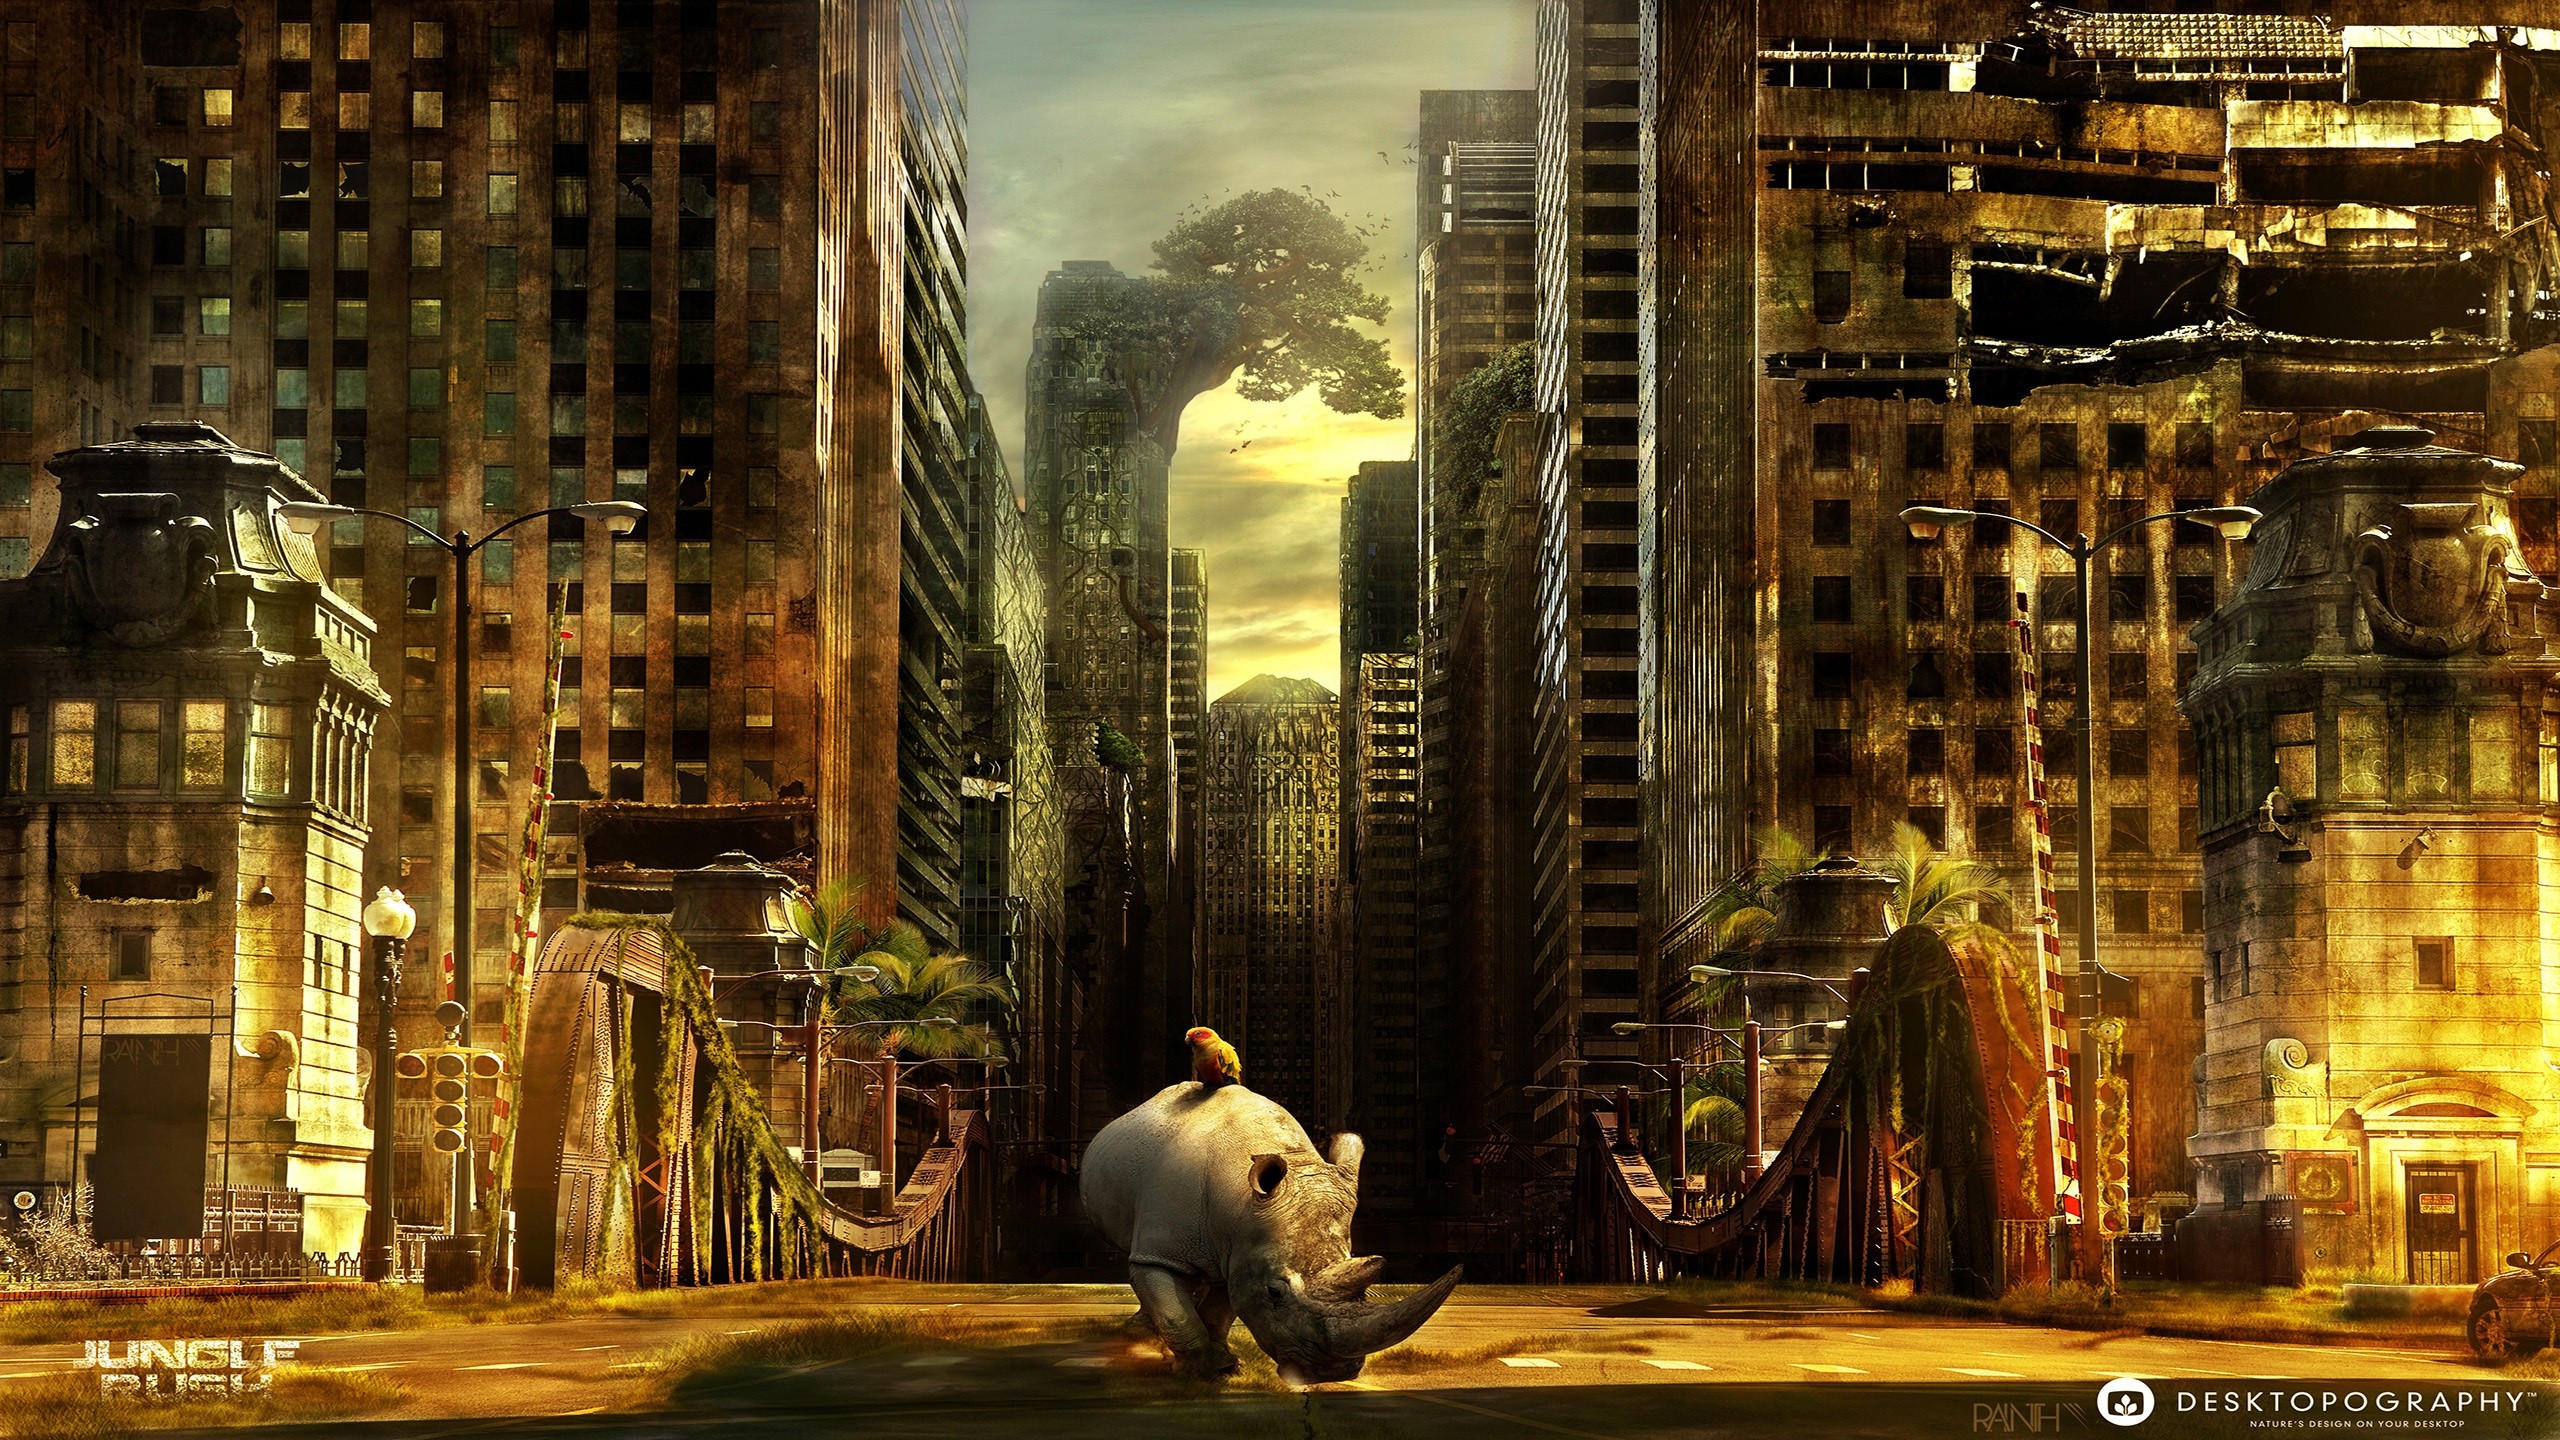 General 2560x1440 Desktopography city rhino surreal cityscape CGI digital art